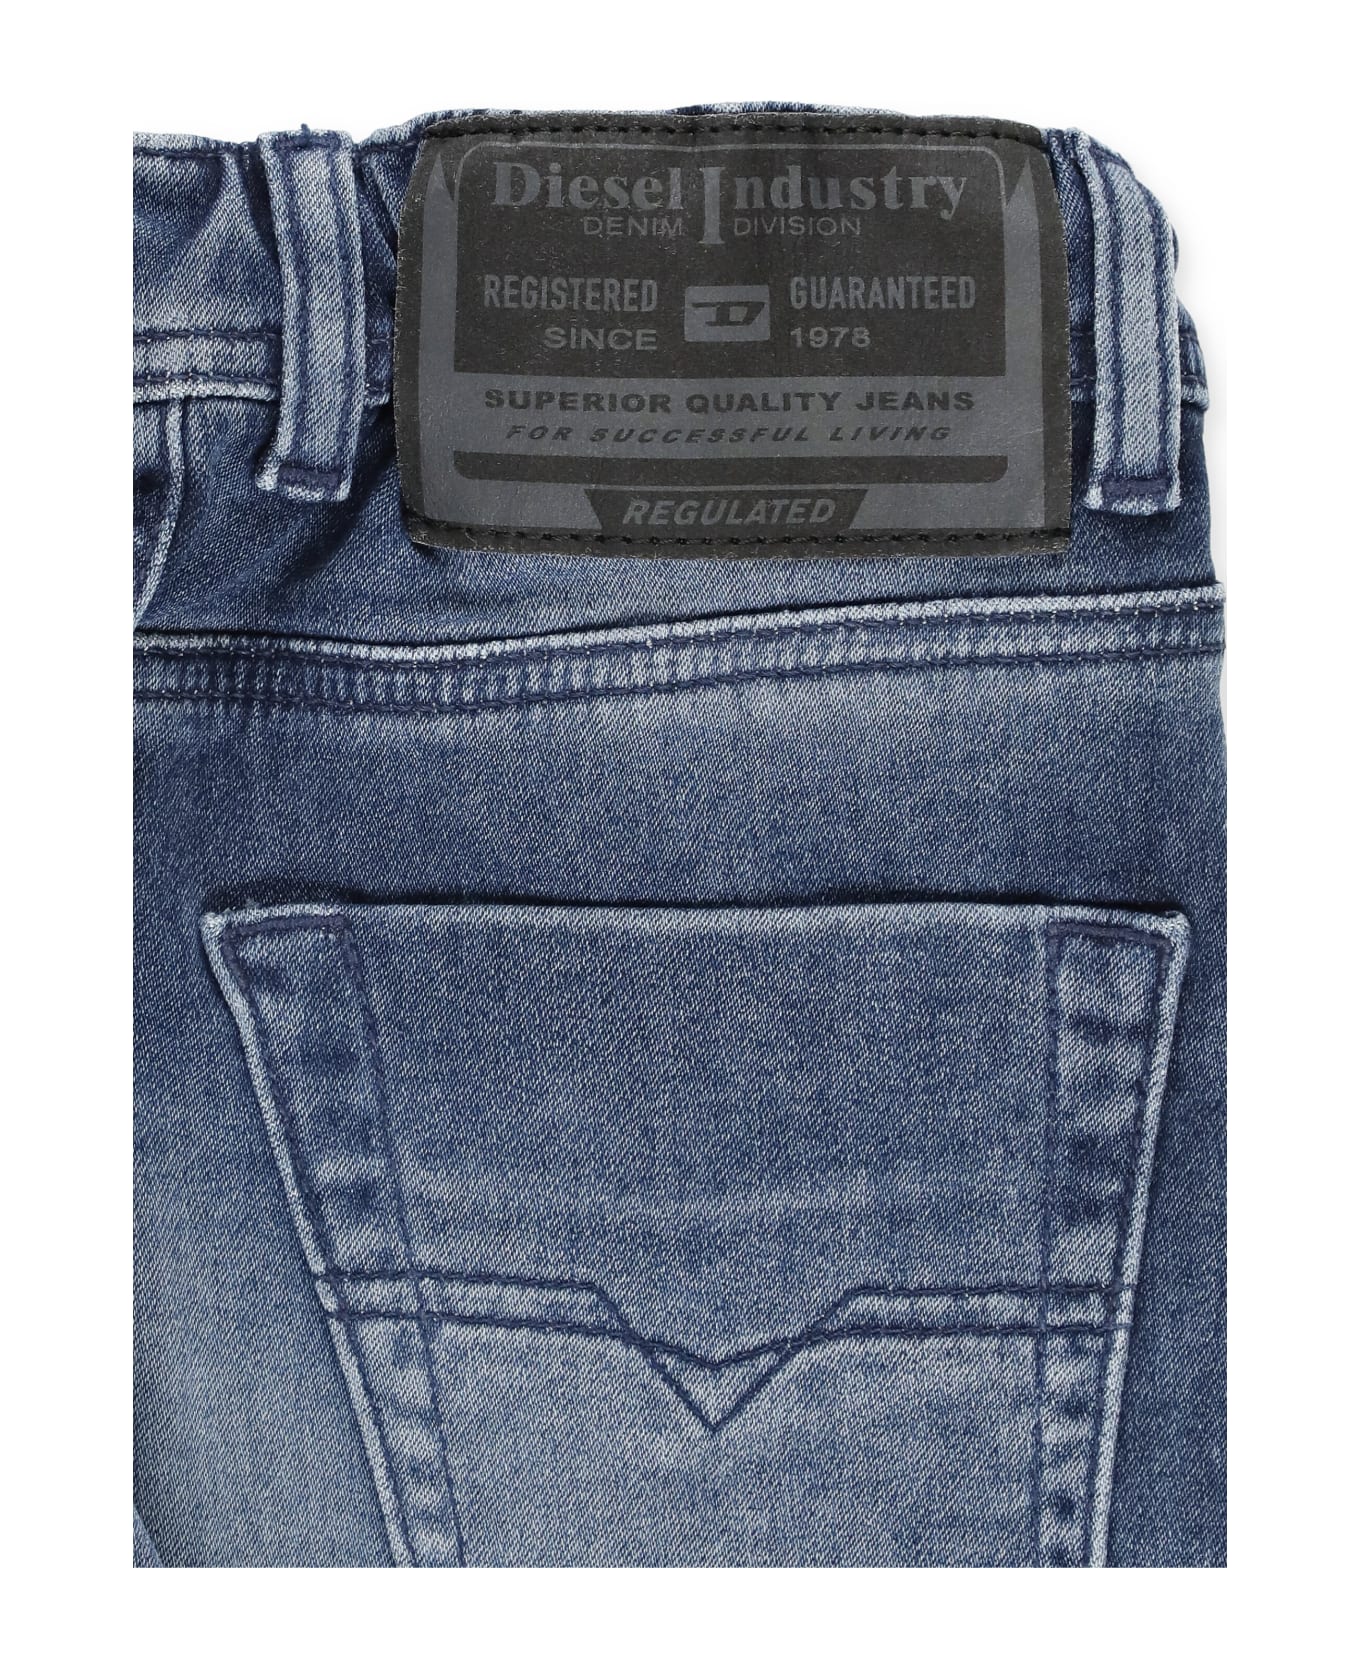 Diesel Denim Bermuda Shorts - Blue ボトムス